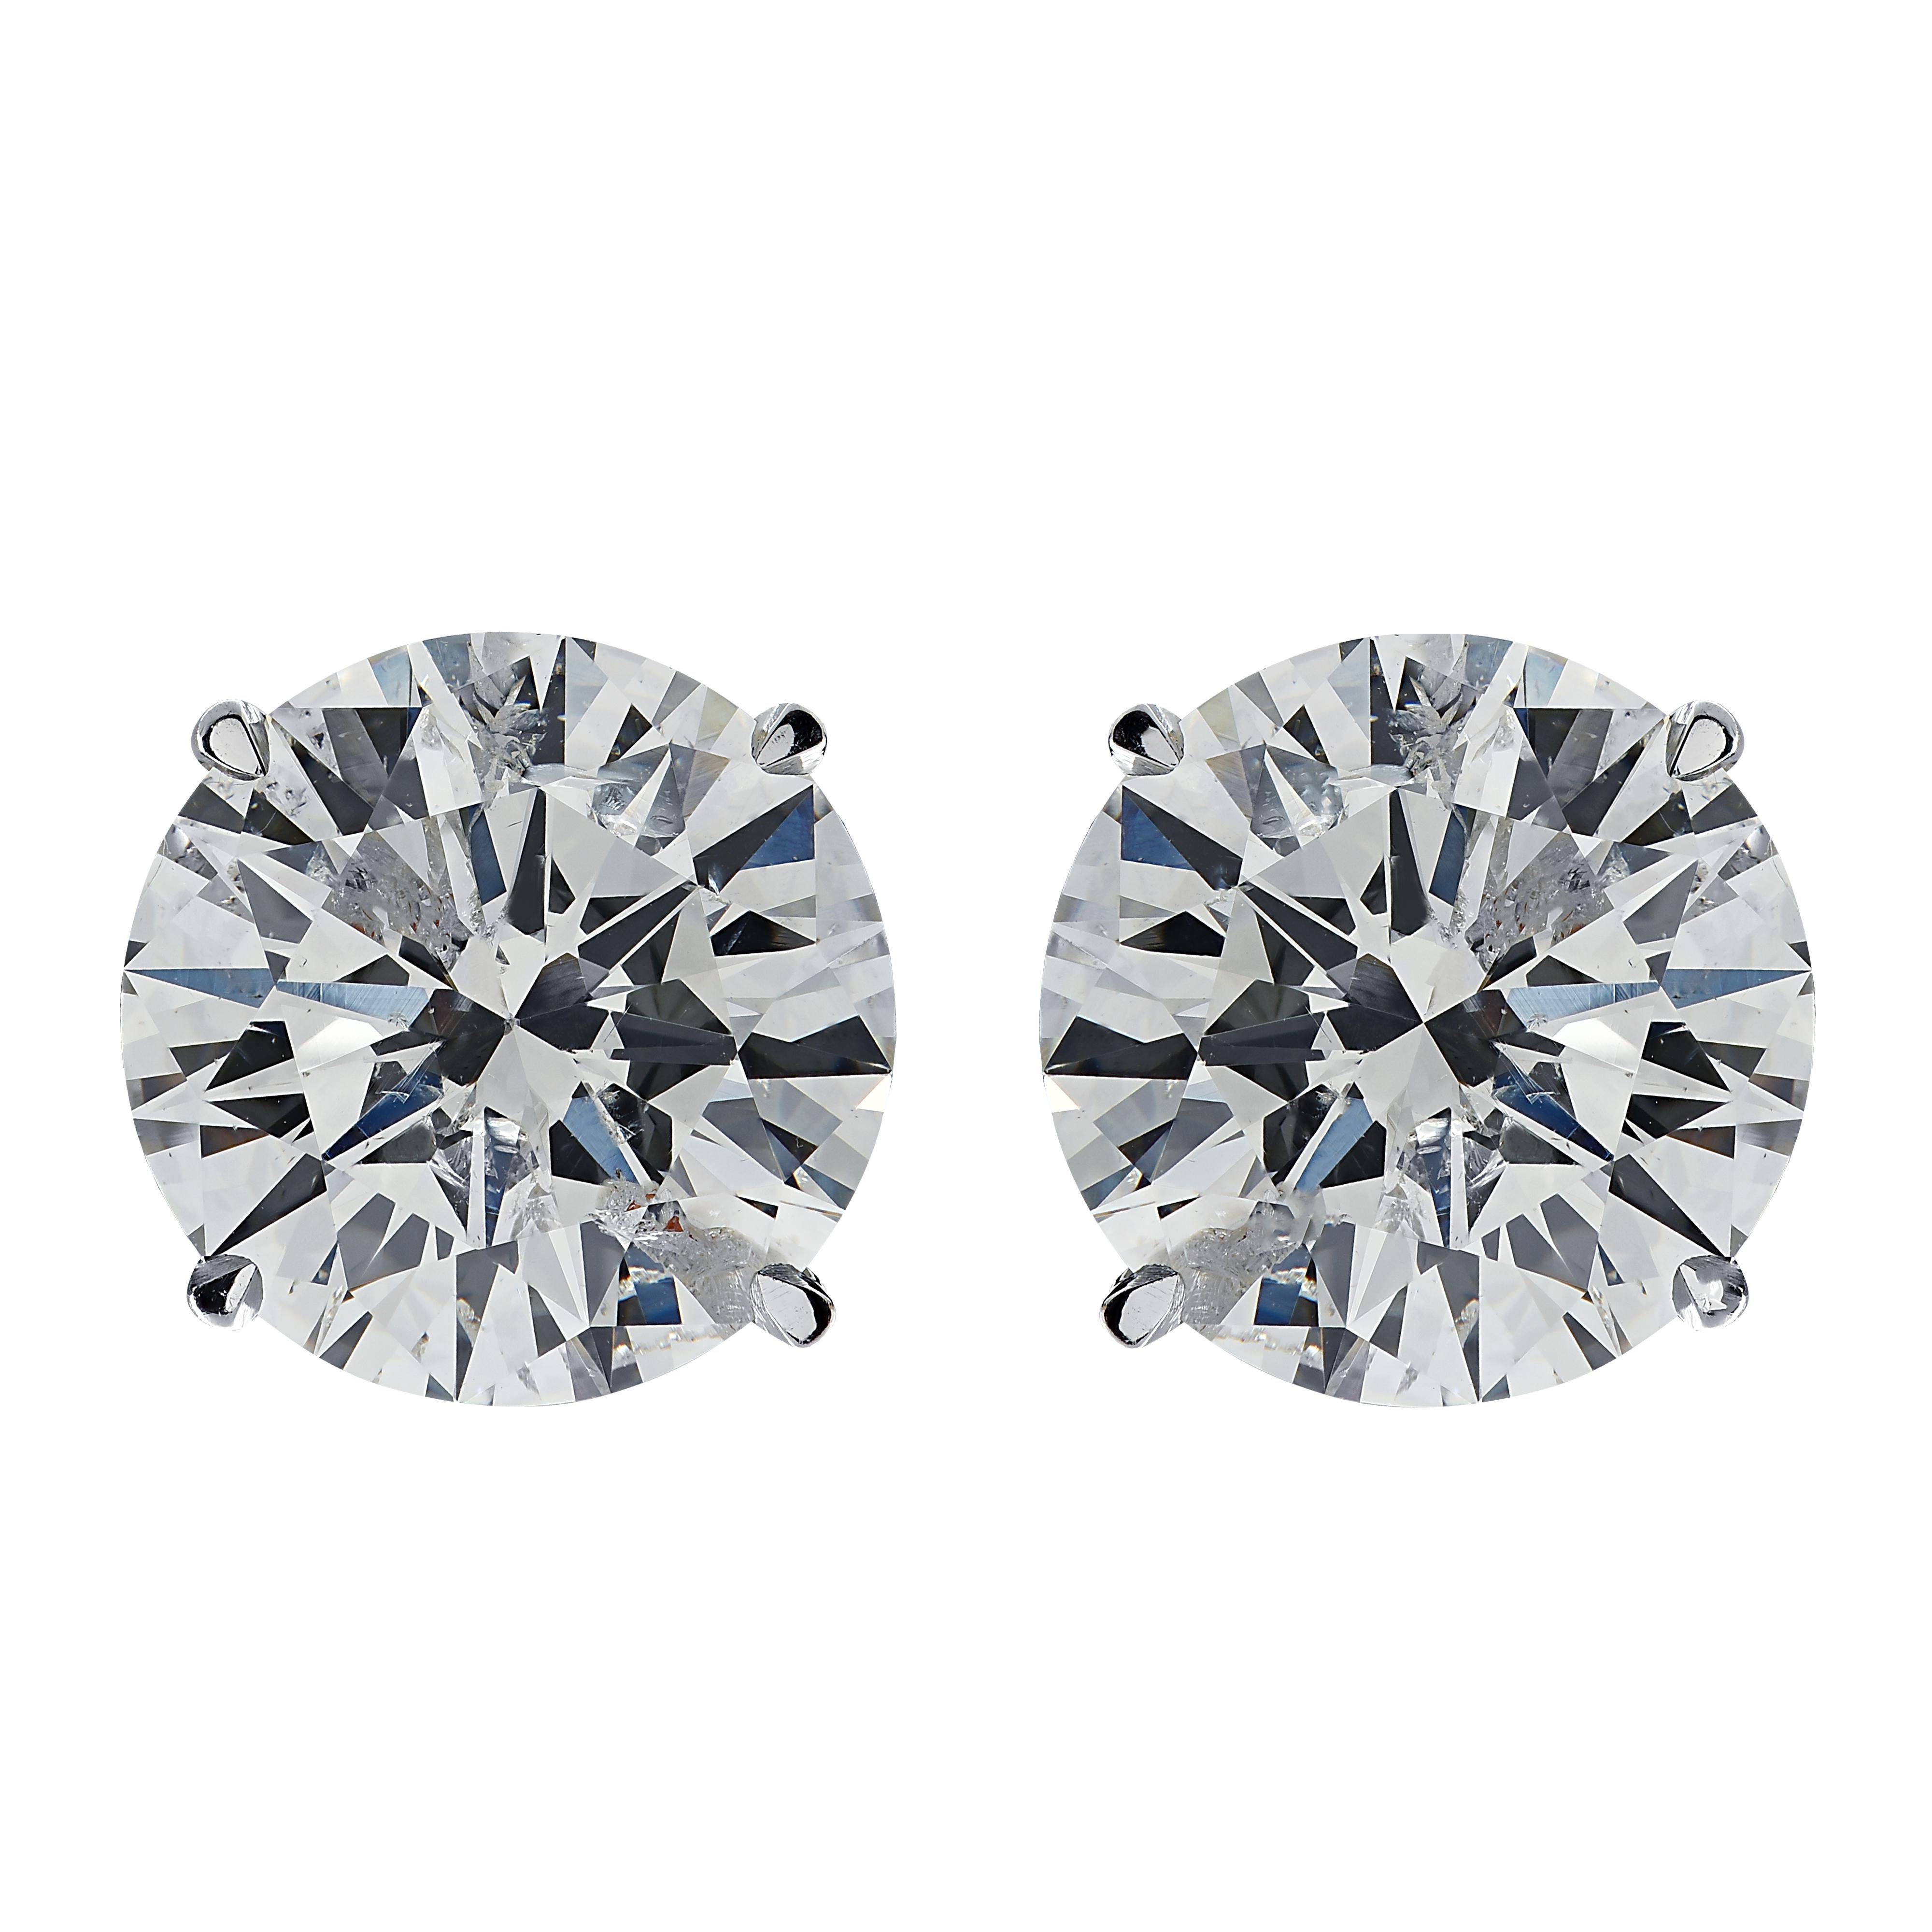 Round Cut Vivid Diamonds GIA Certified 4.03 Carat Diamonds Solitaire Stud Earrings For Sale